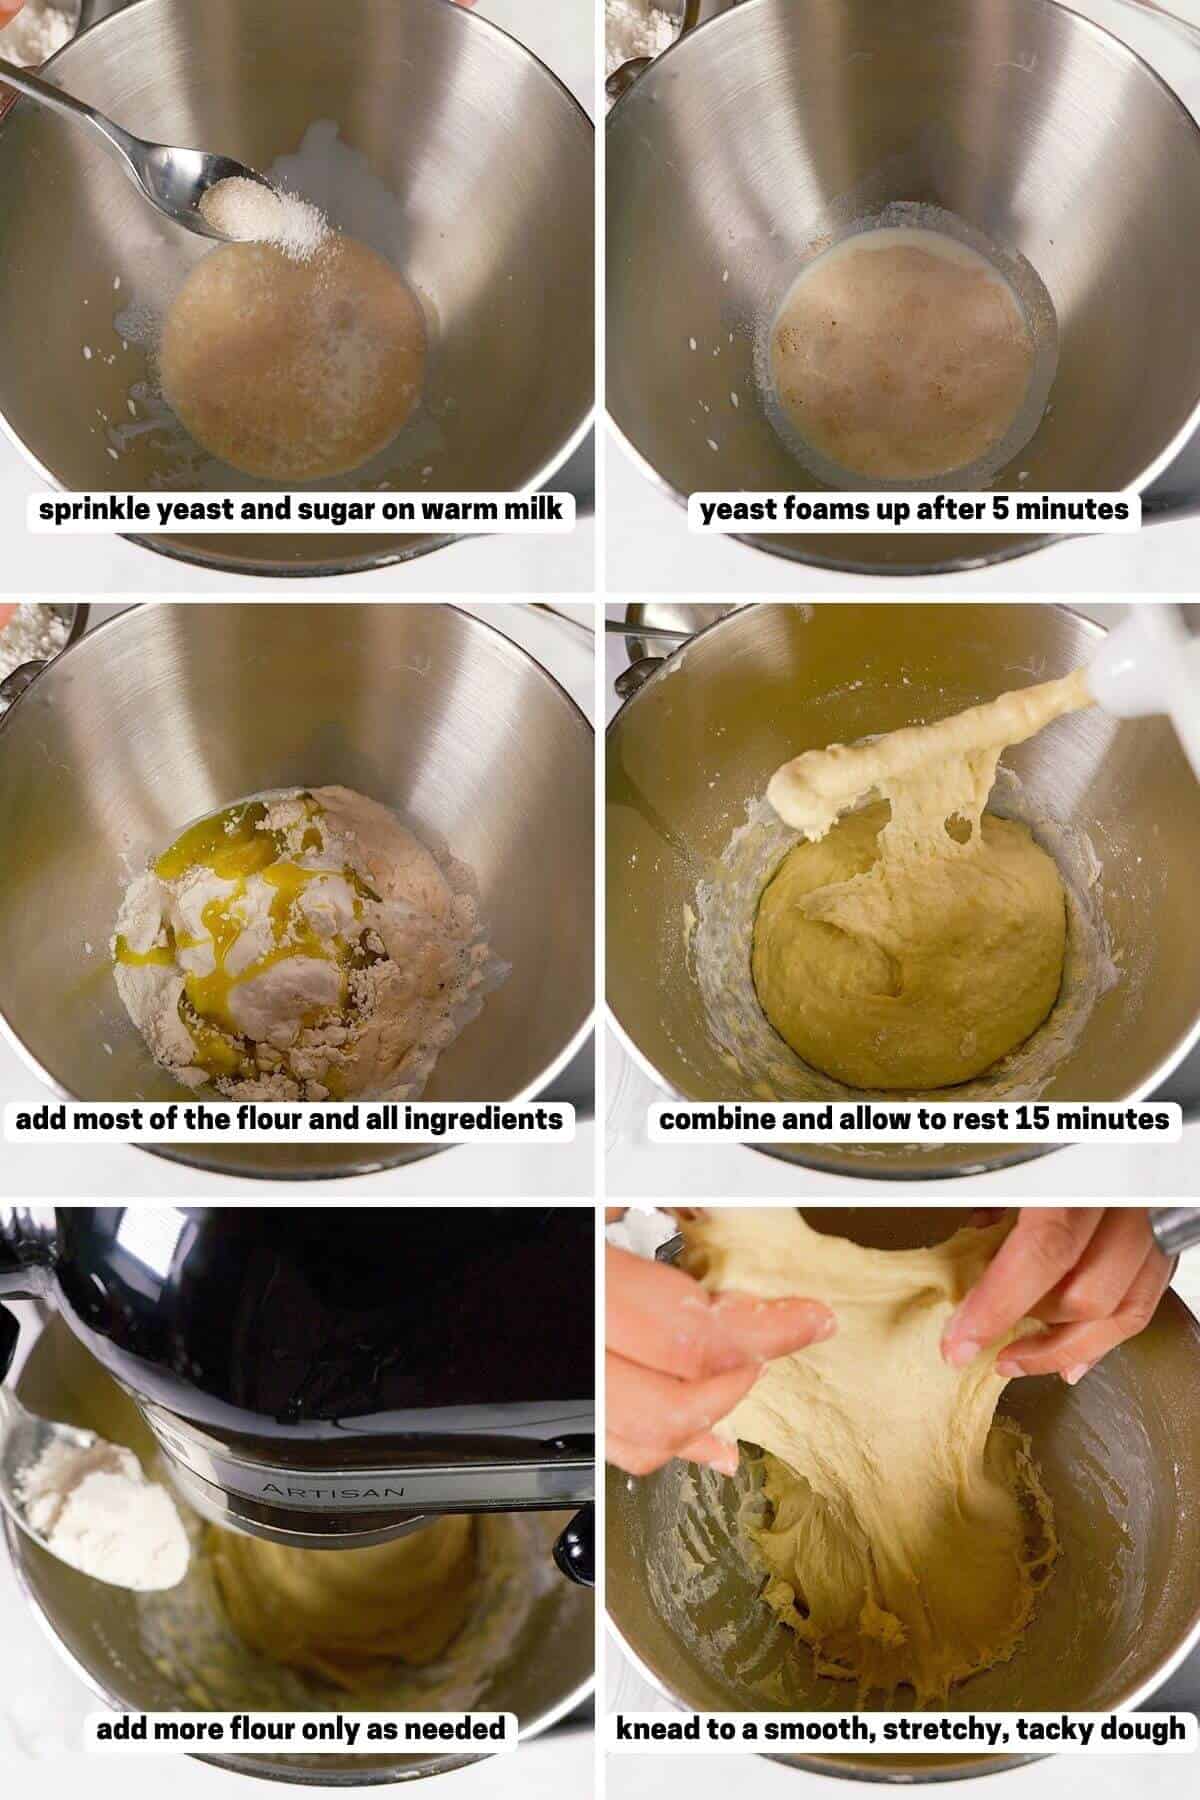 Making the dough.